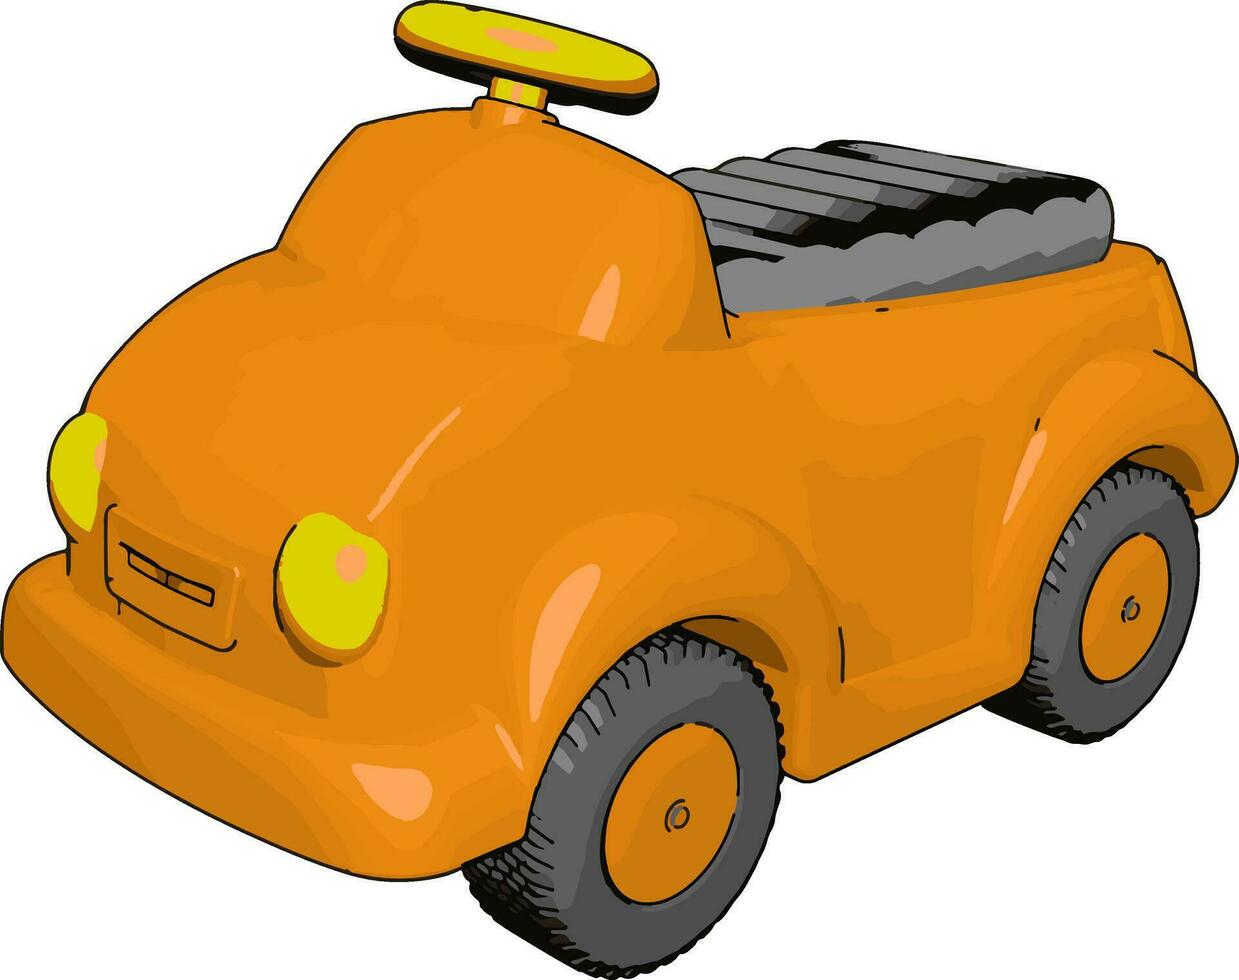 pequeno carro laranja, ilustração, vetor em fundo branco.